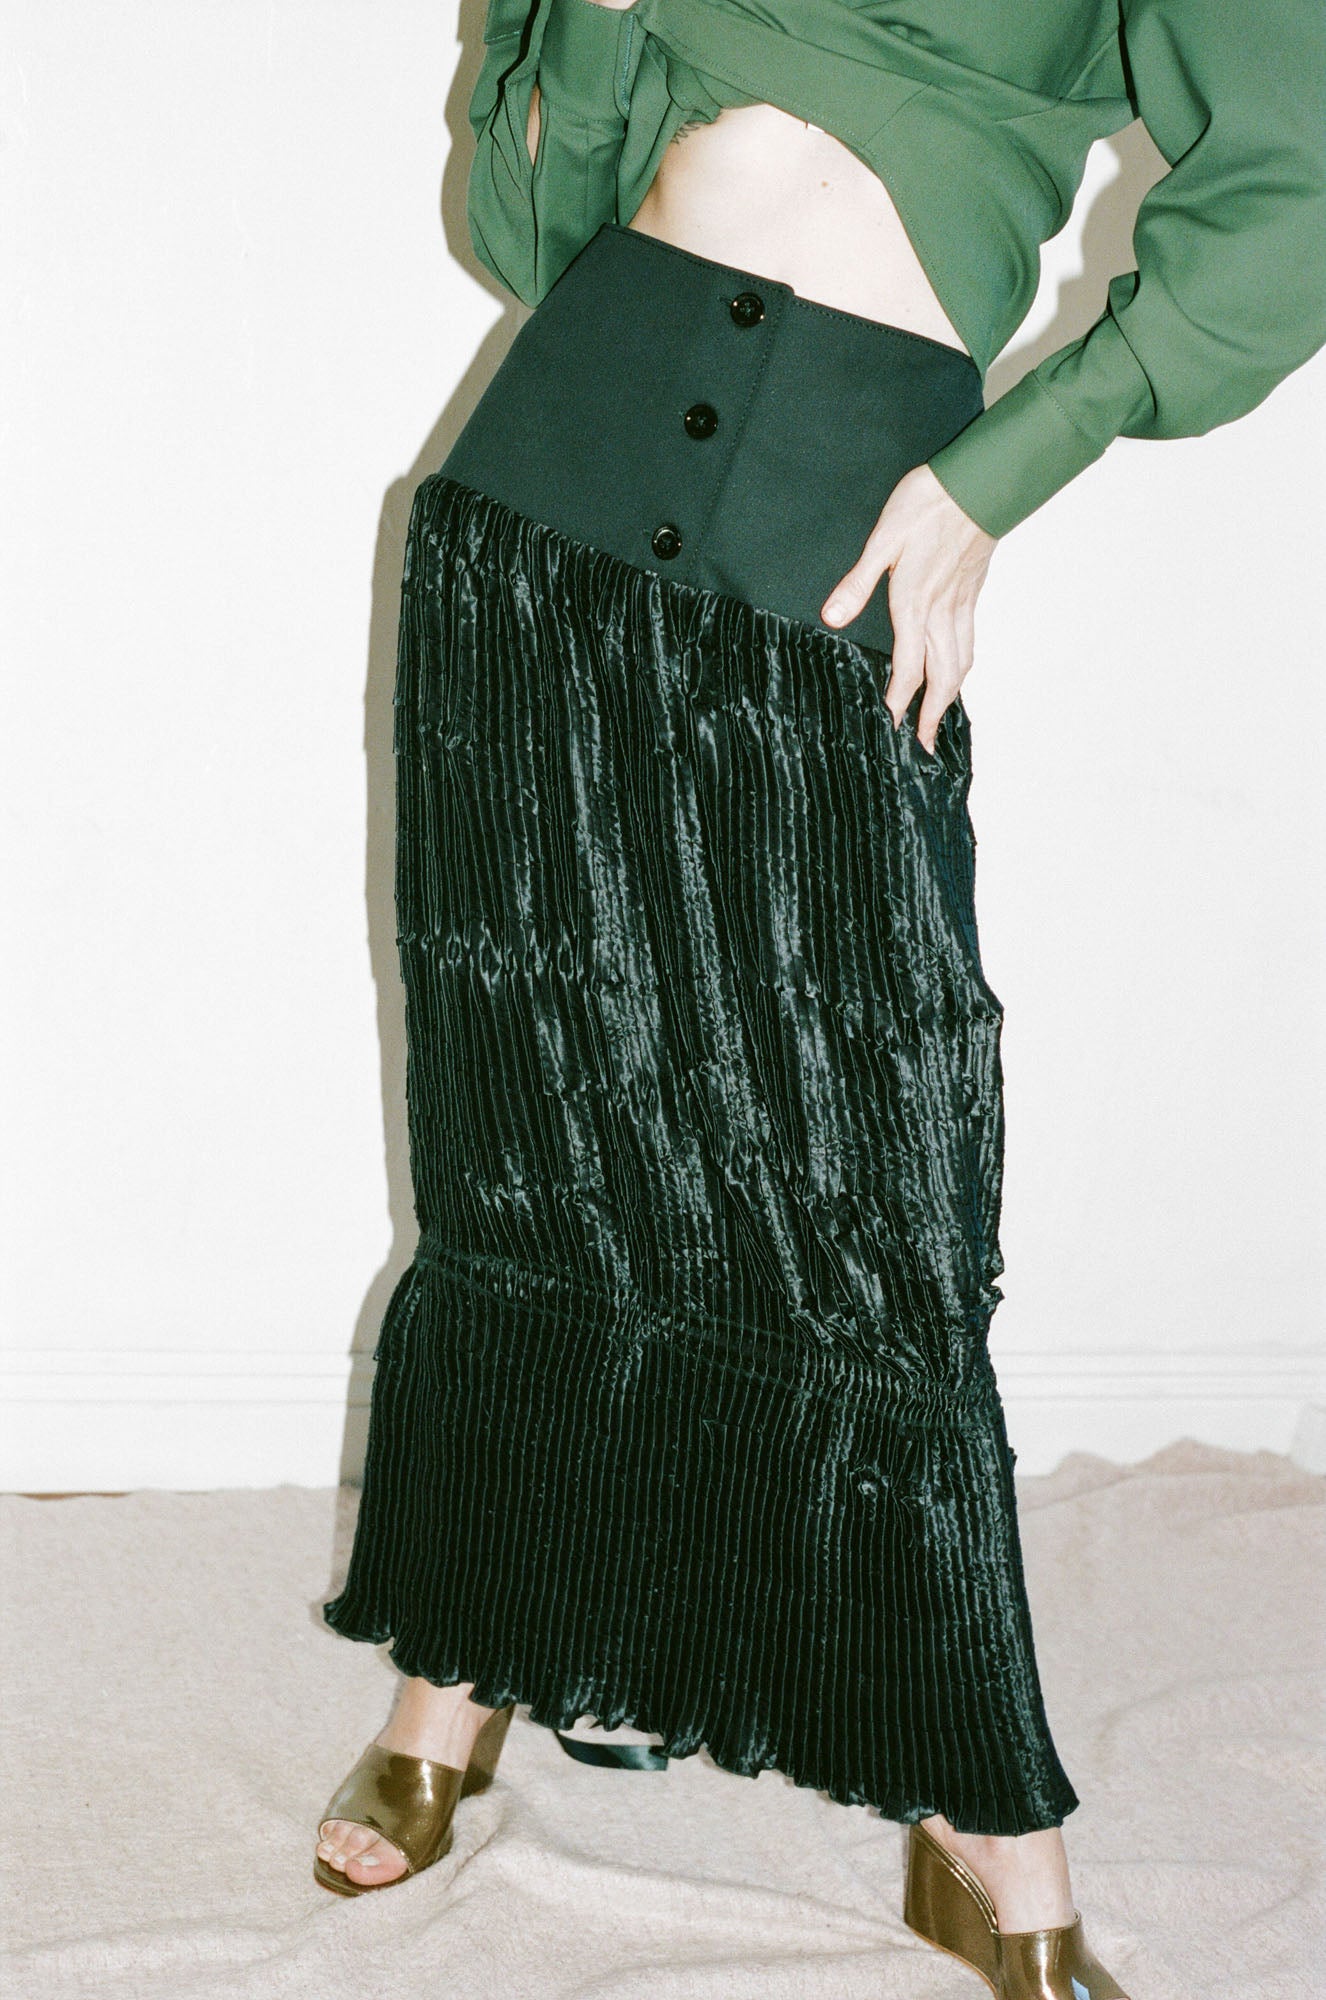 Renaissance Justine Skirt in Black